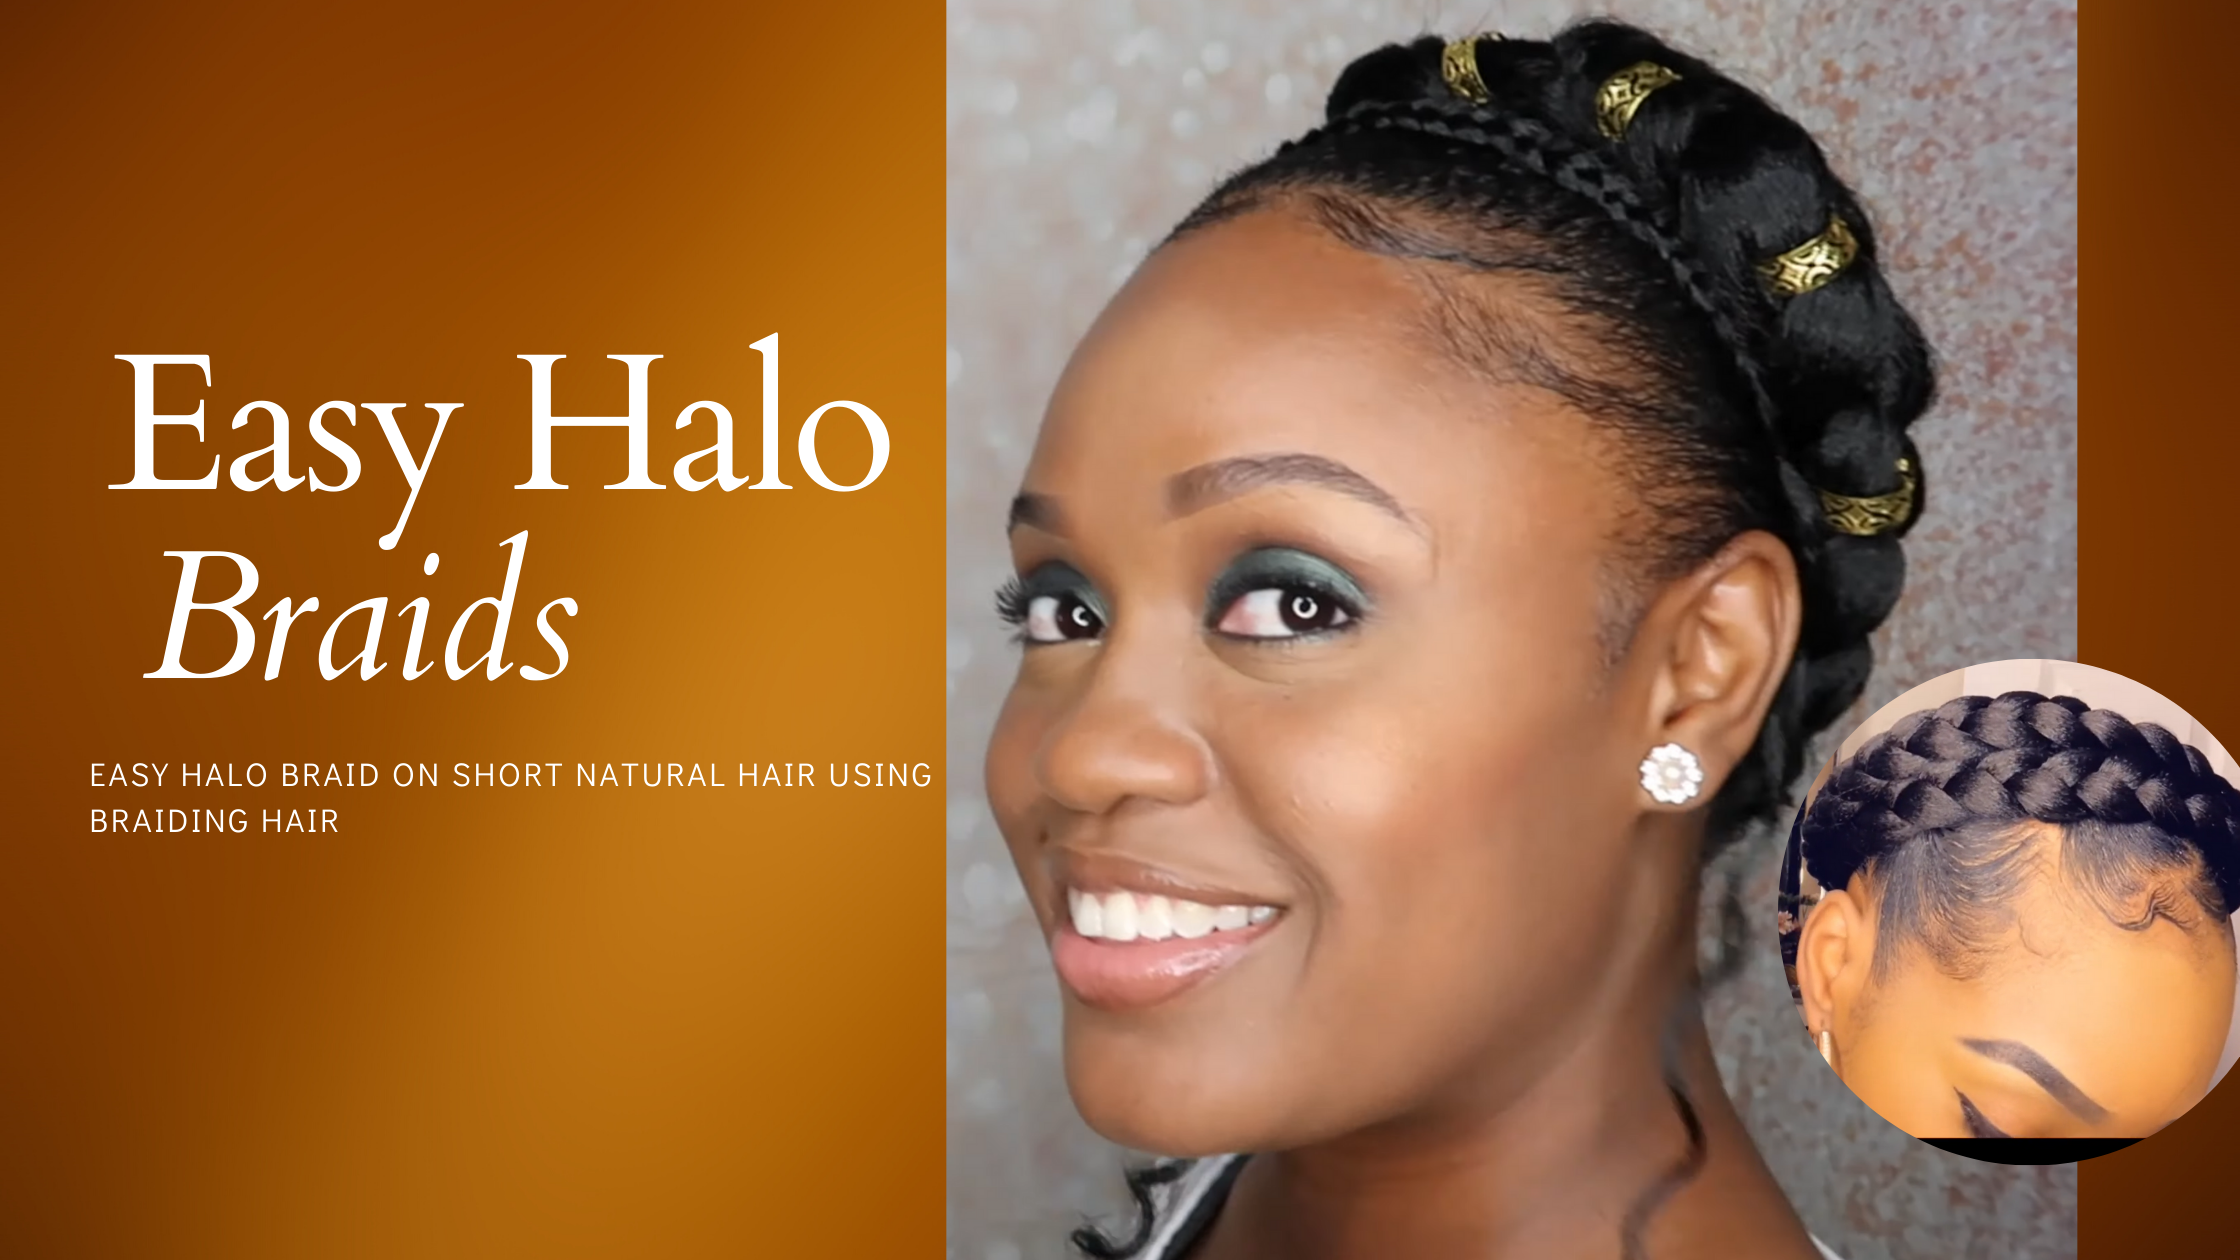 7. "Halo Braid for Short Blonde Hair" - wide 1